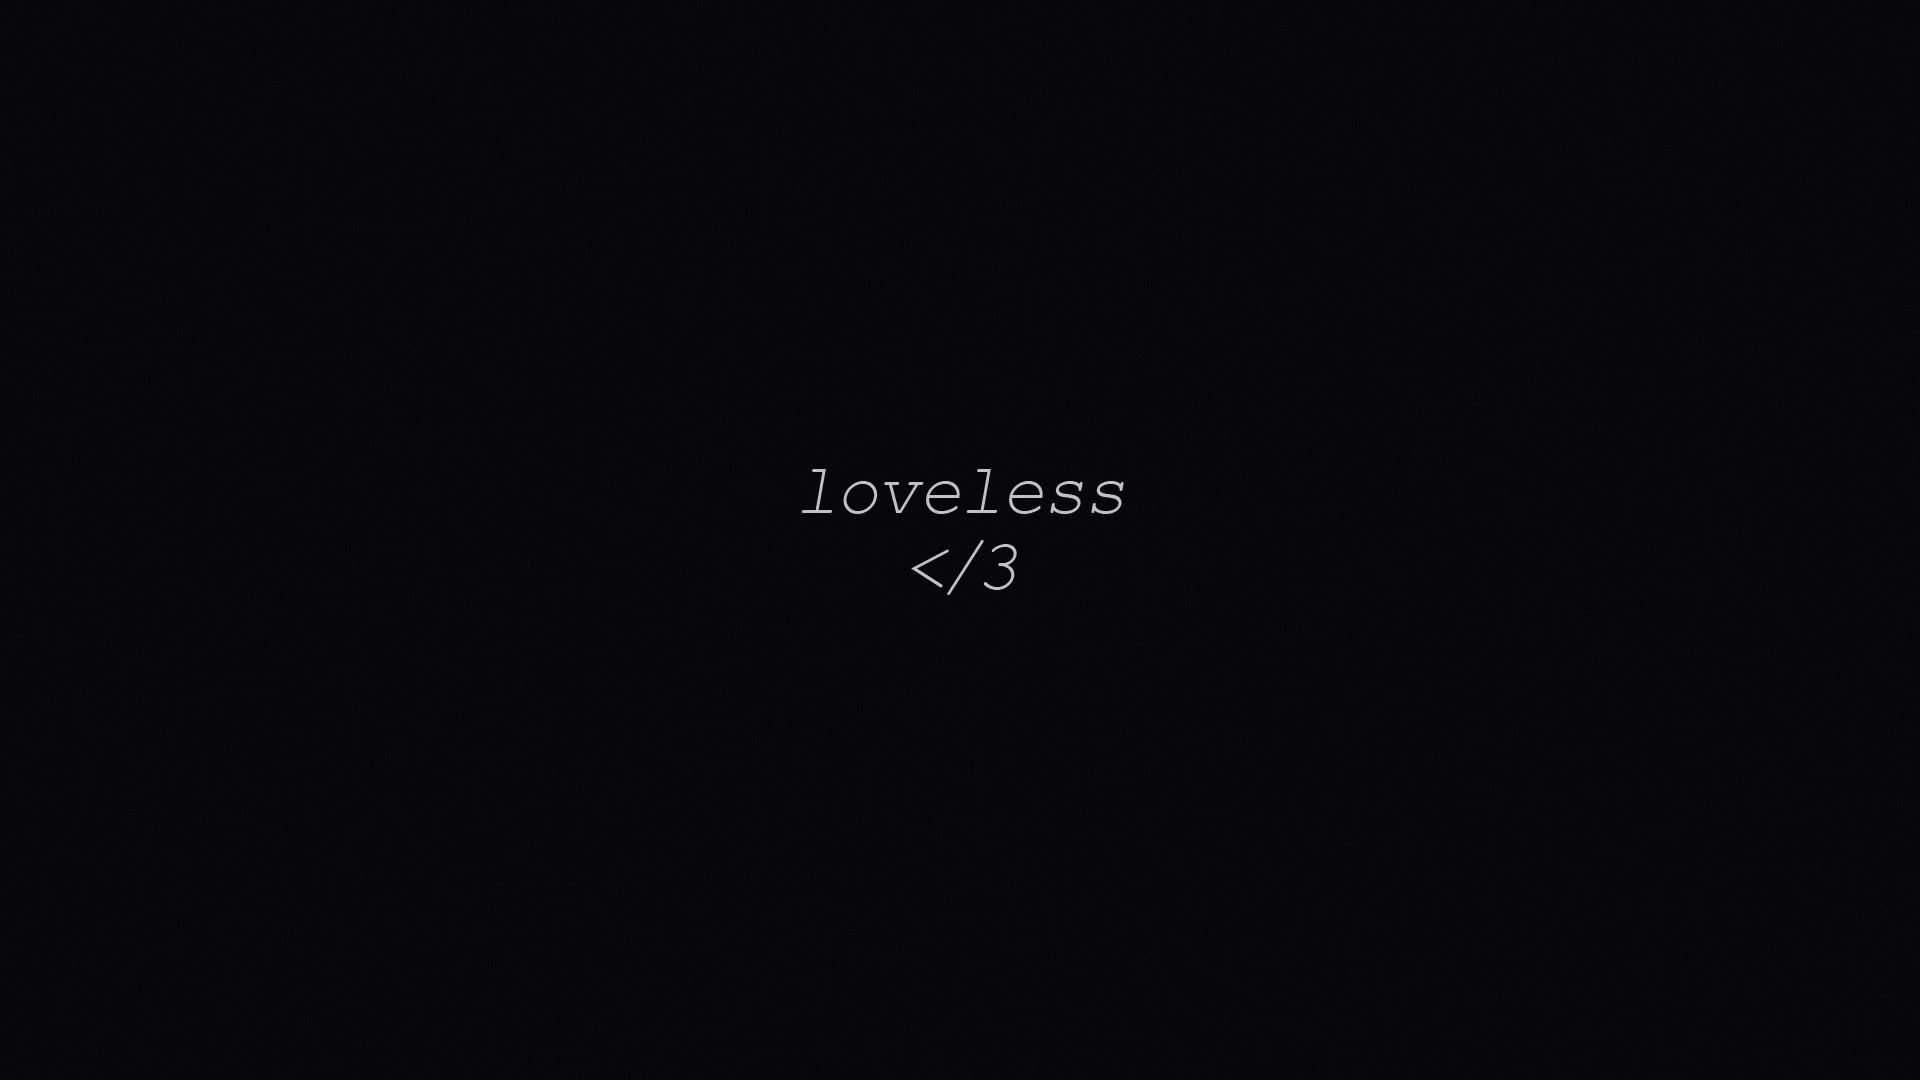 General 1920x1080 simple background black background minimalism emotion depressing sadness dark text sad artwork